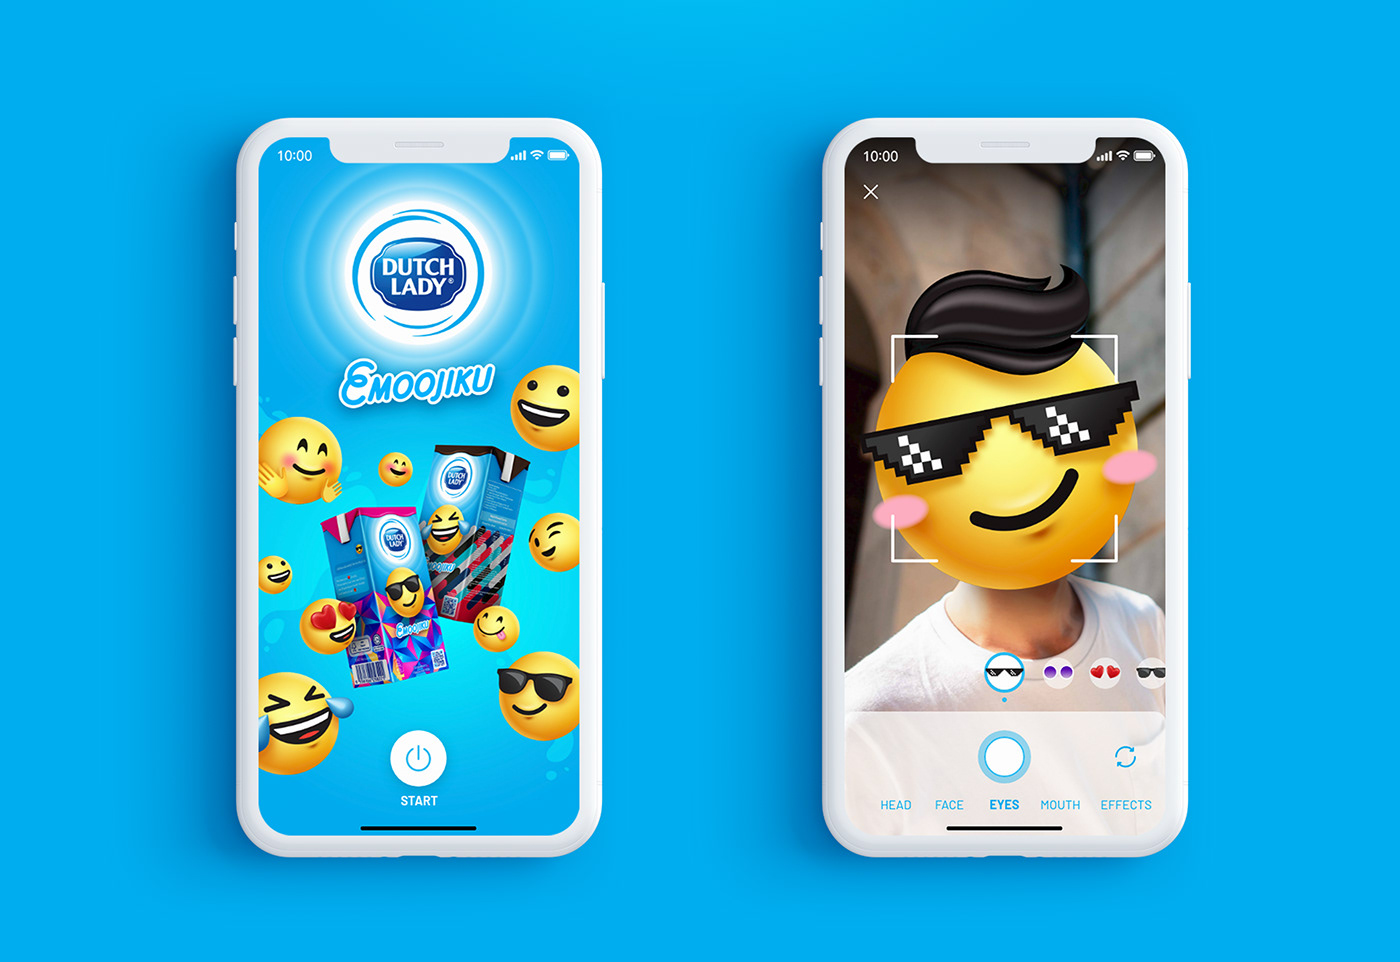 Emoji milk Packaging Dutch Lady UI/UX digital augmented reality application drink series